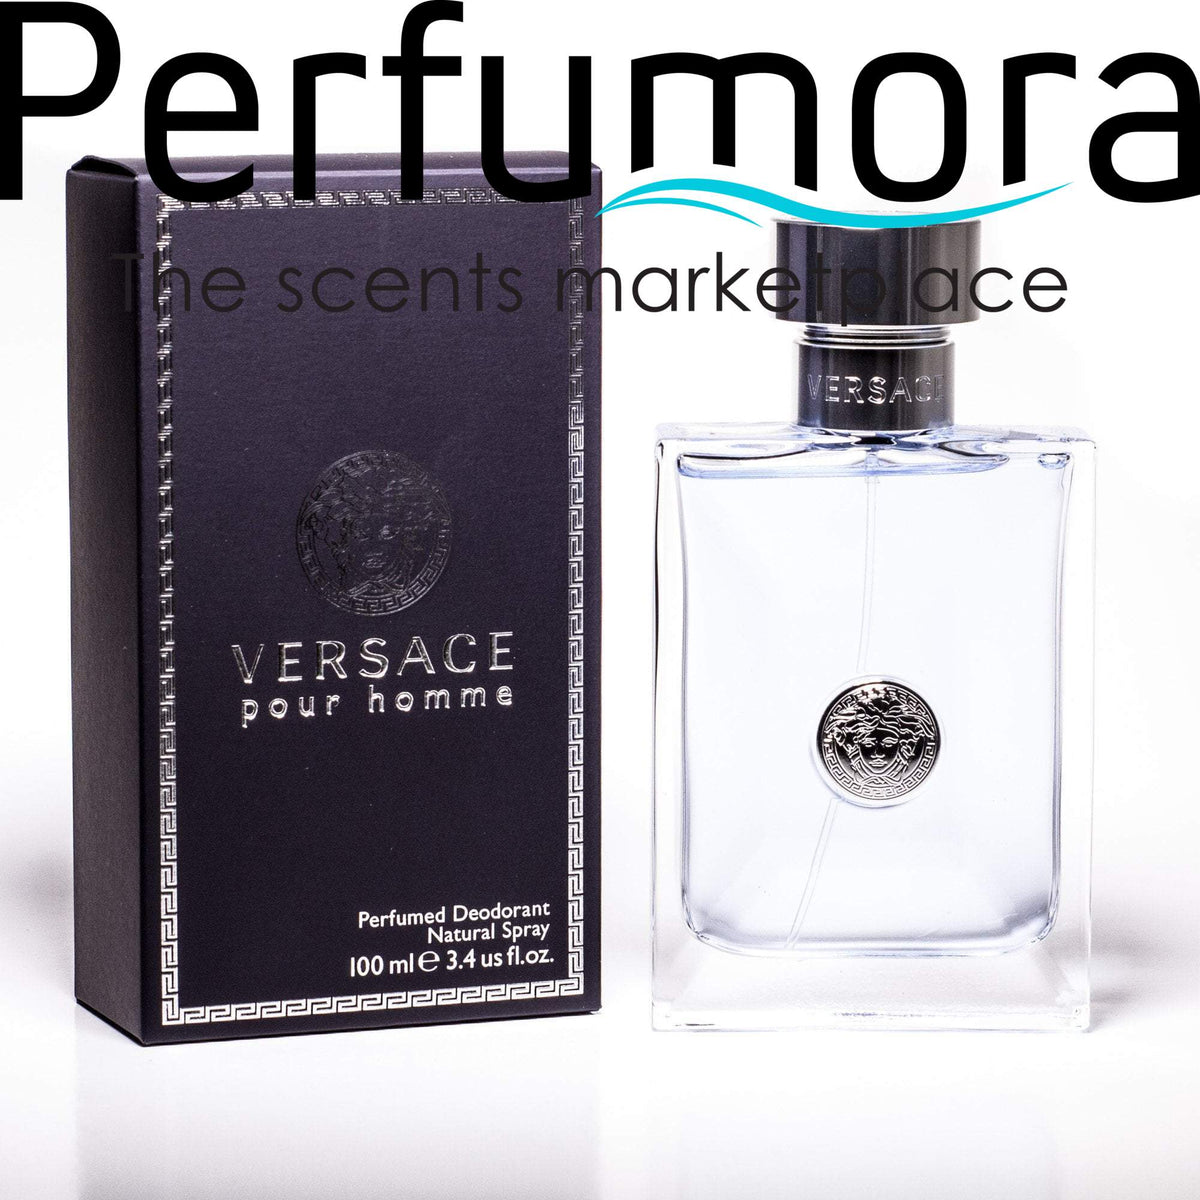 Versace Pour Homme Perfumed Deodorant for Men by Versace 3.4 oz.